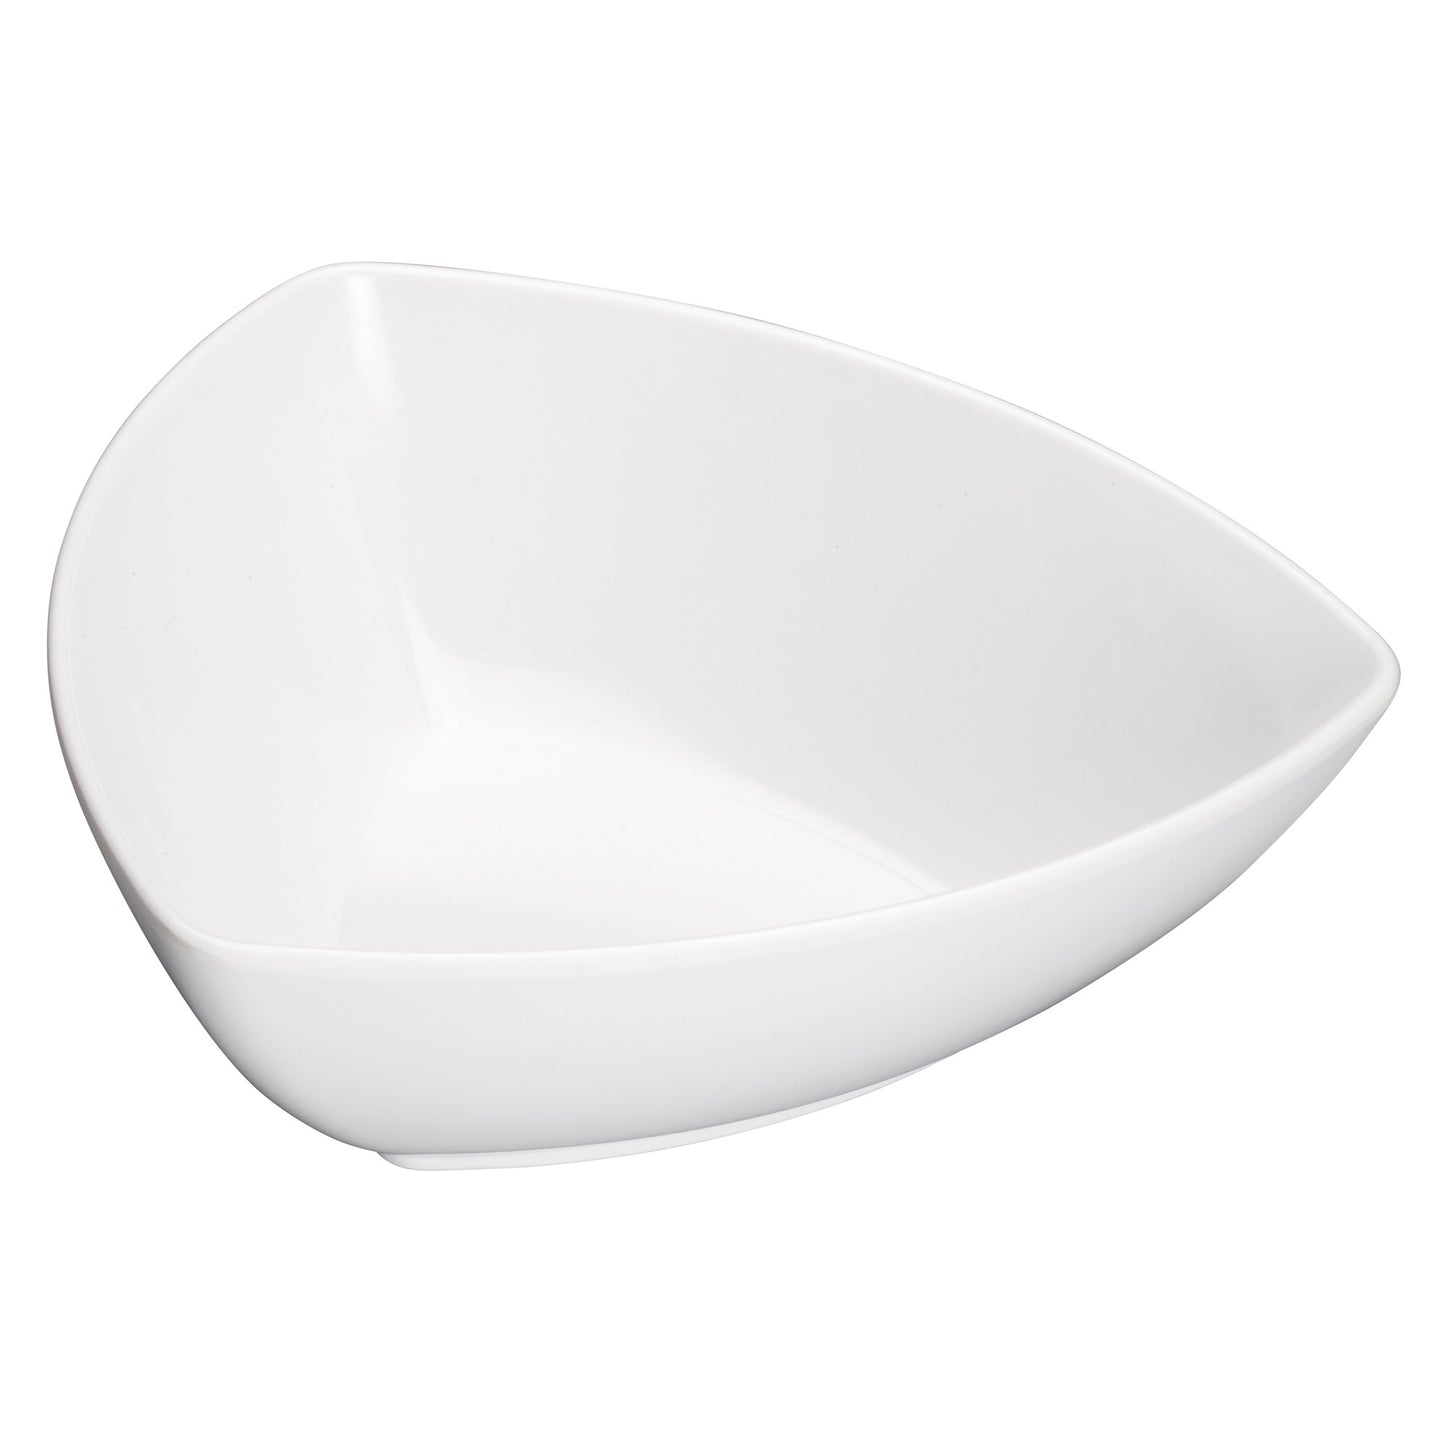 WDM005-201 - 7" Melamine Triangular Bowl, White, 24pcs/case